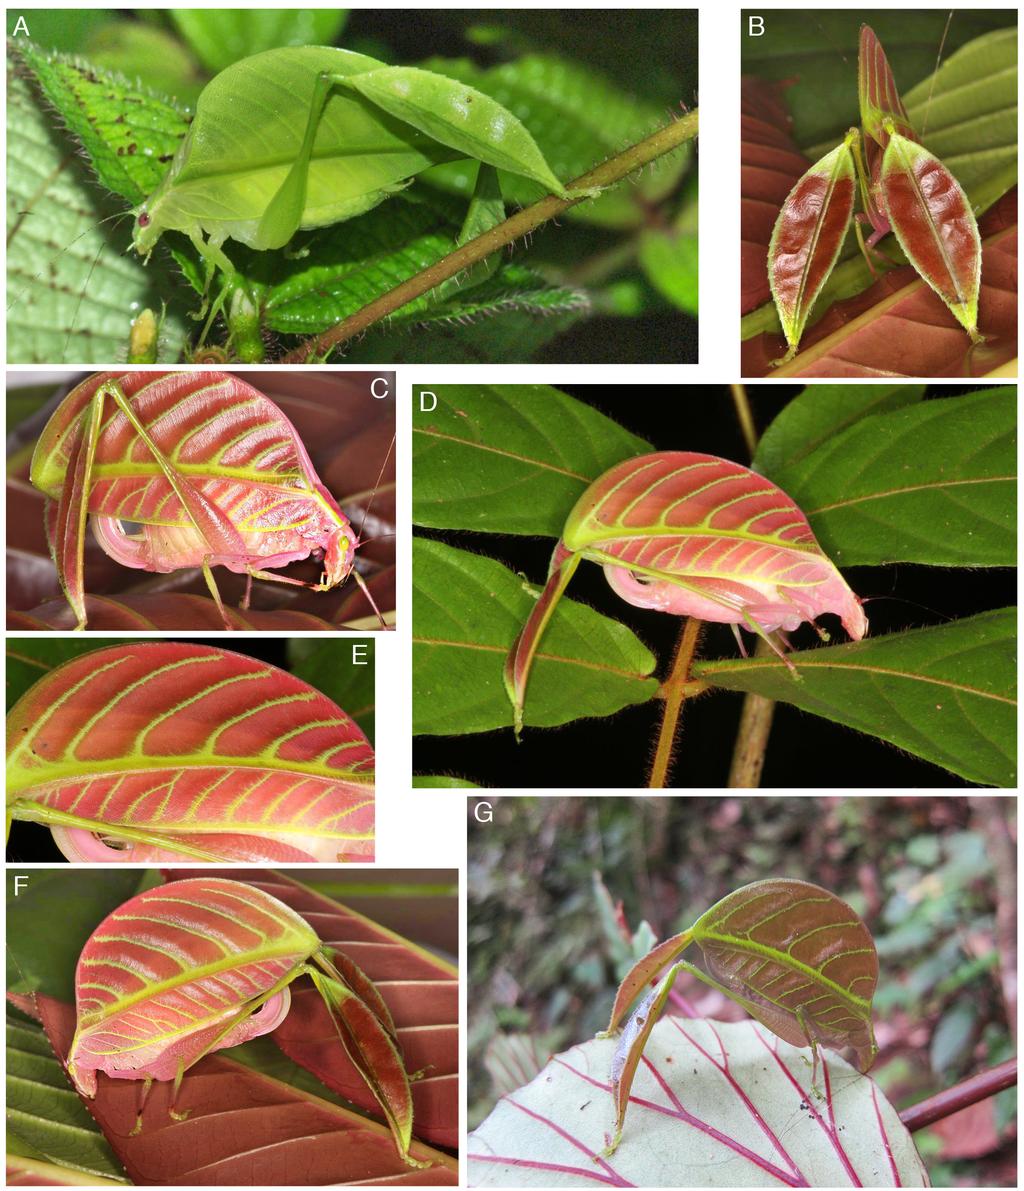 72 S. INGRISCH, K. RIEDE, G. BECCALONI Fig. 3. Eulophophyllum species in habitat (A, D, G) and sitting on red leaves (B-C, E-F): A, E. kirki sp. n. male (Danum); B-F, E. kirki sp. n. female (Danum); G, E.